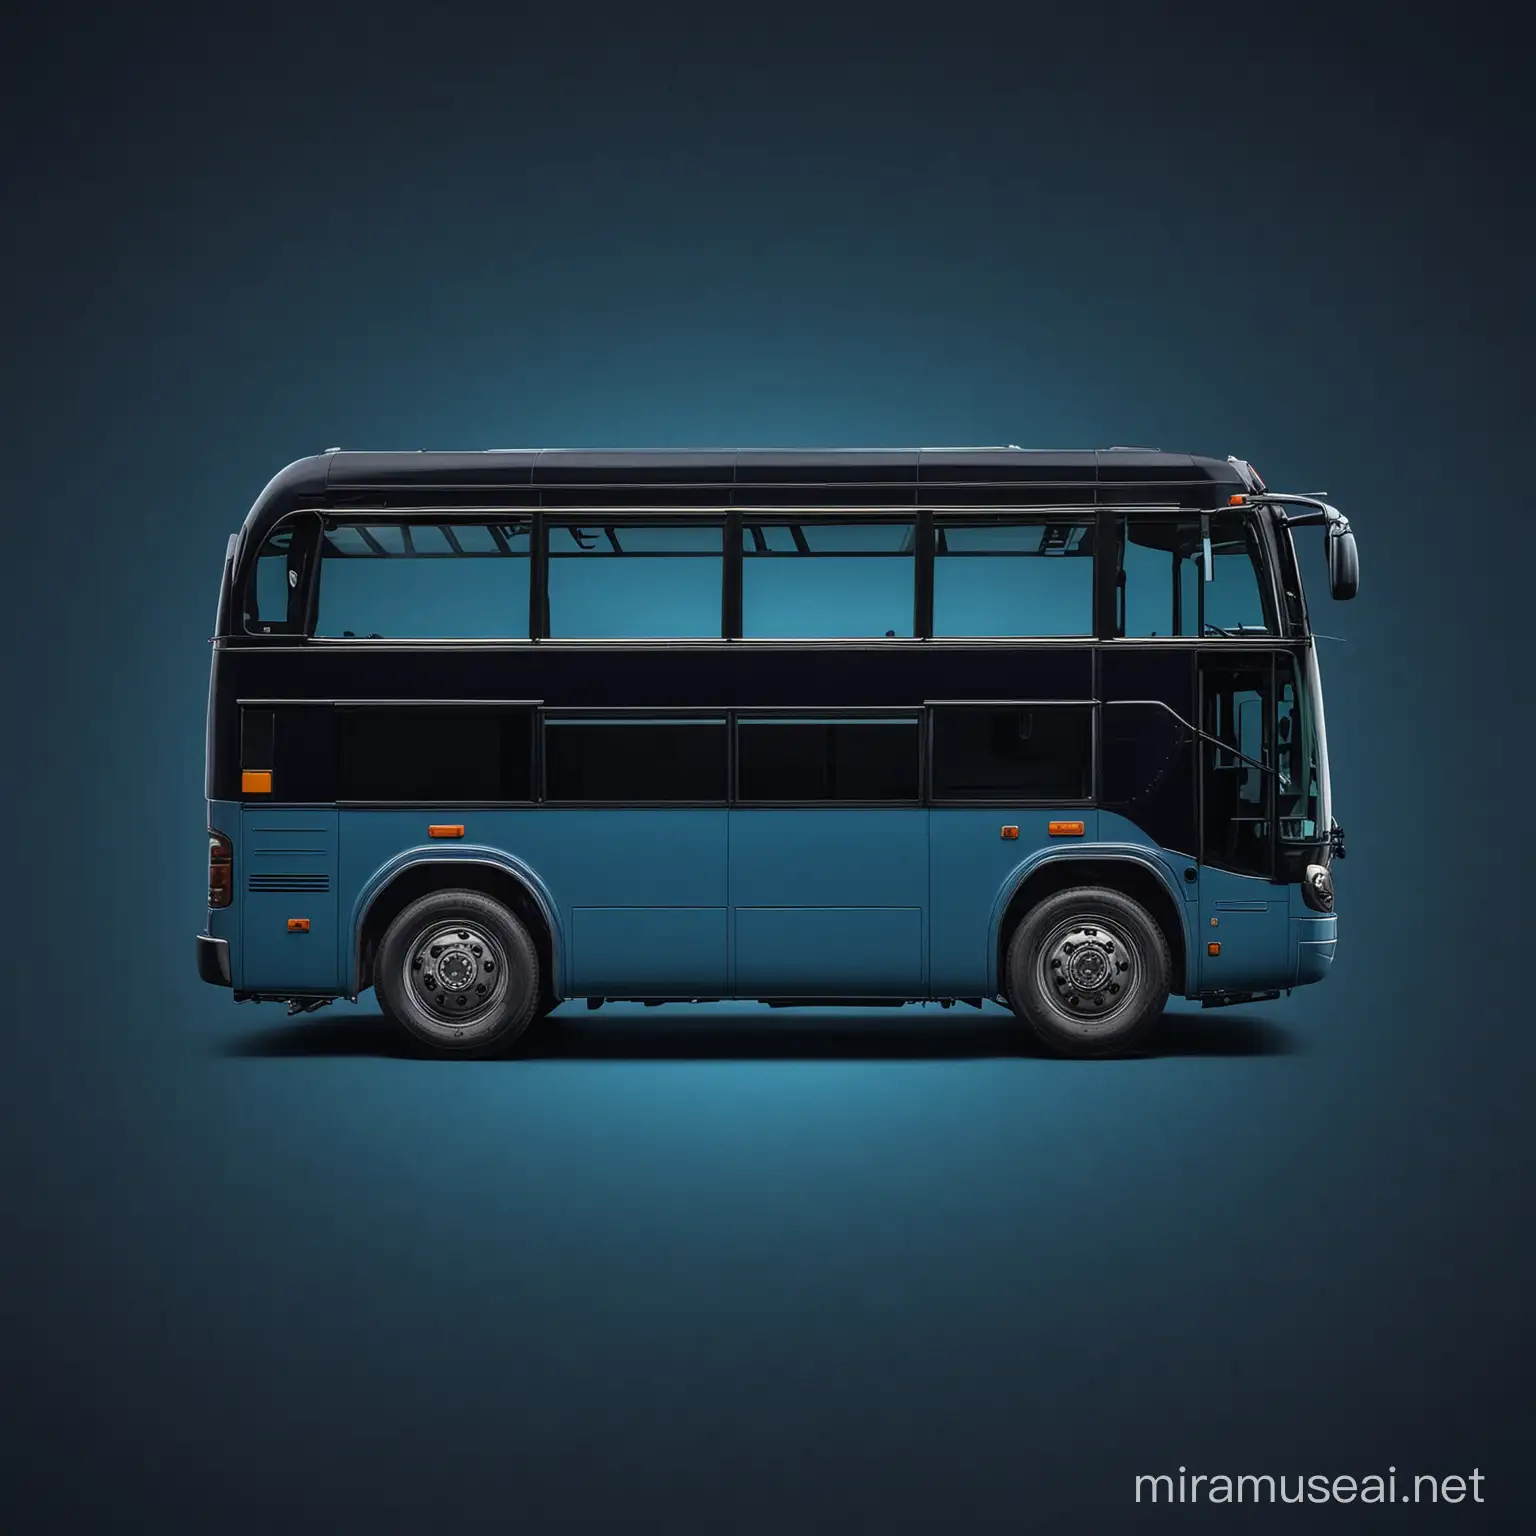 Dark Blue Background Bus Image Urban Transportation in Twilight